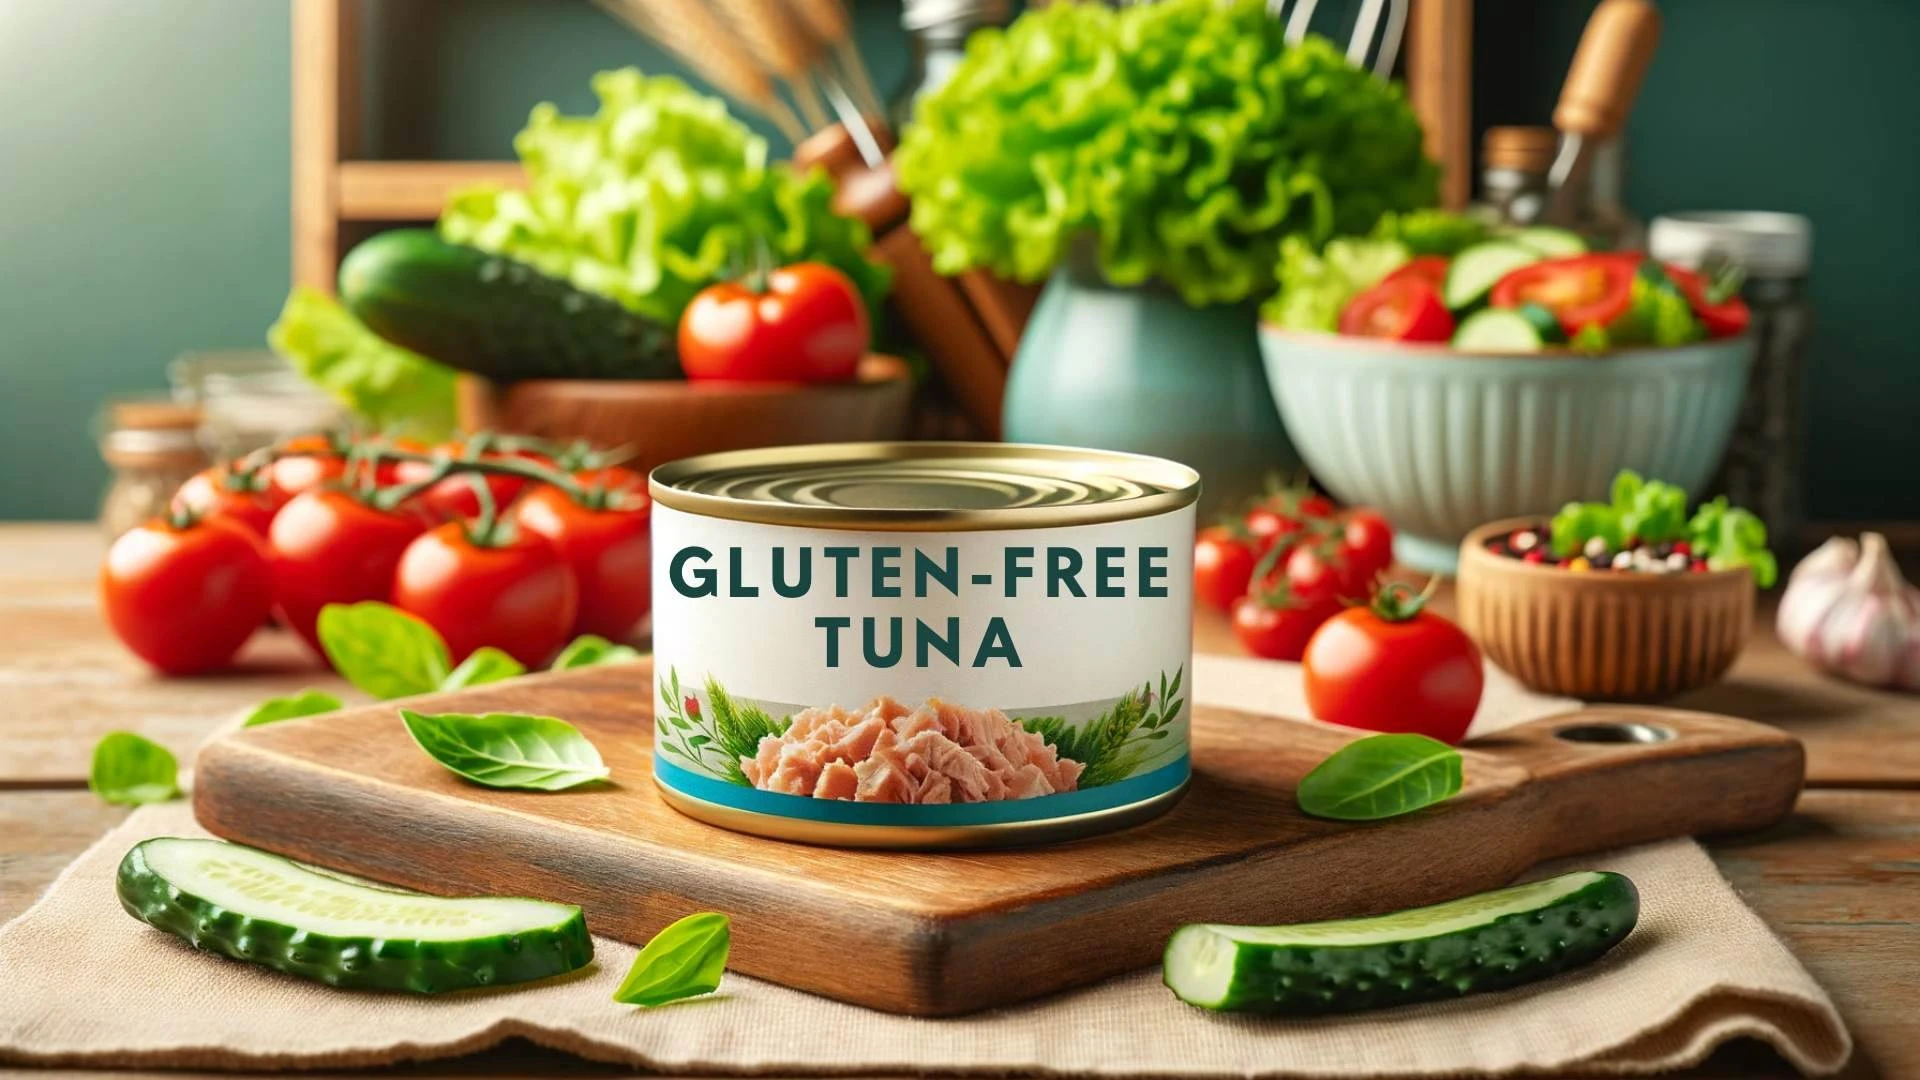 Is tuna gluten-free featured image